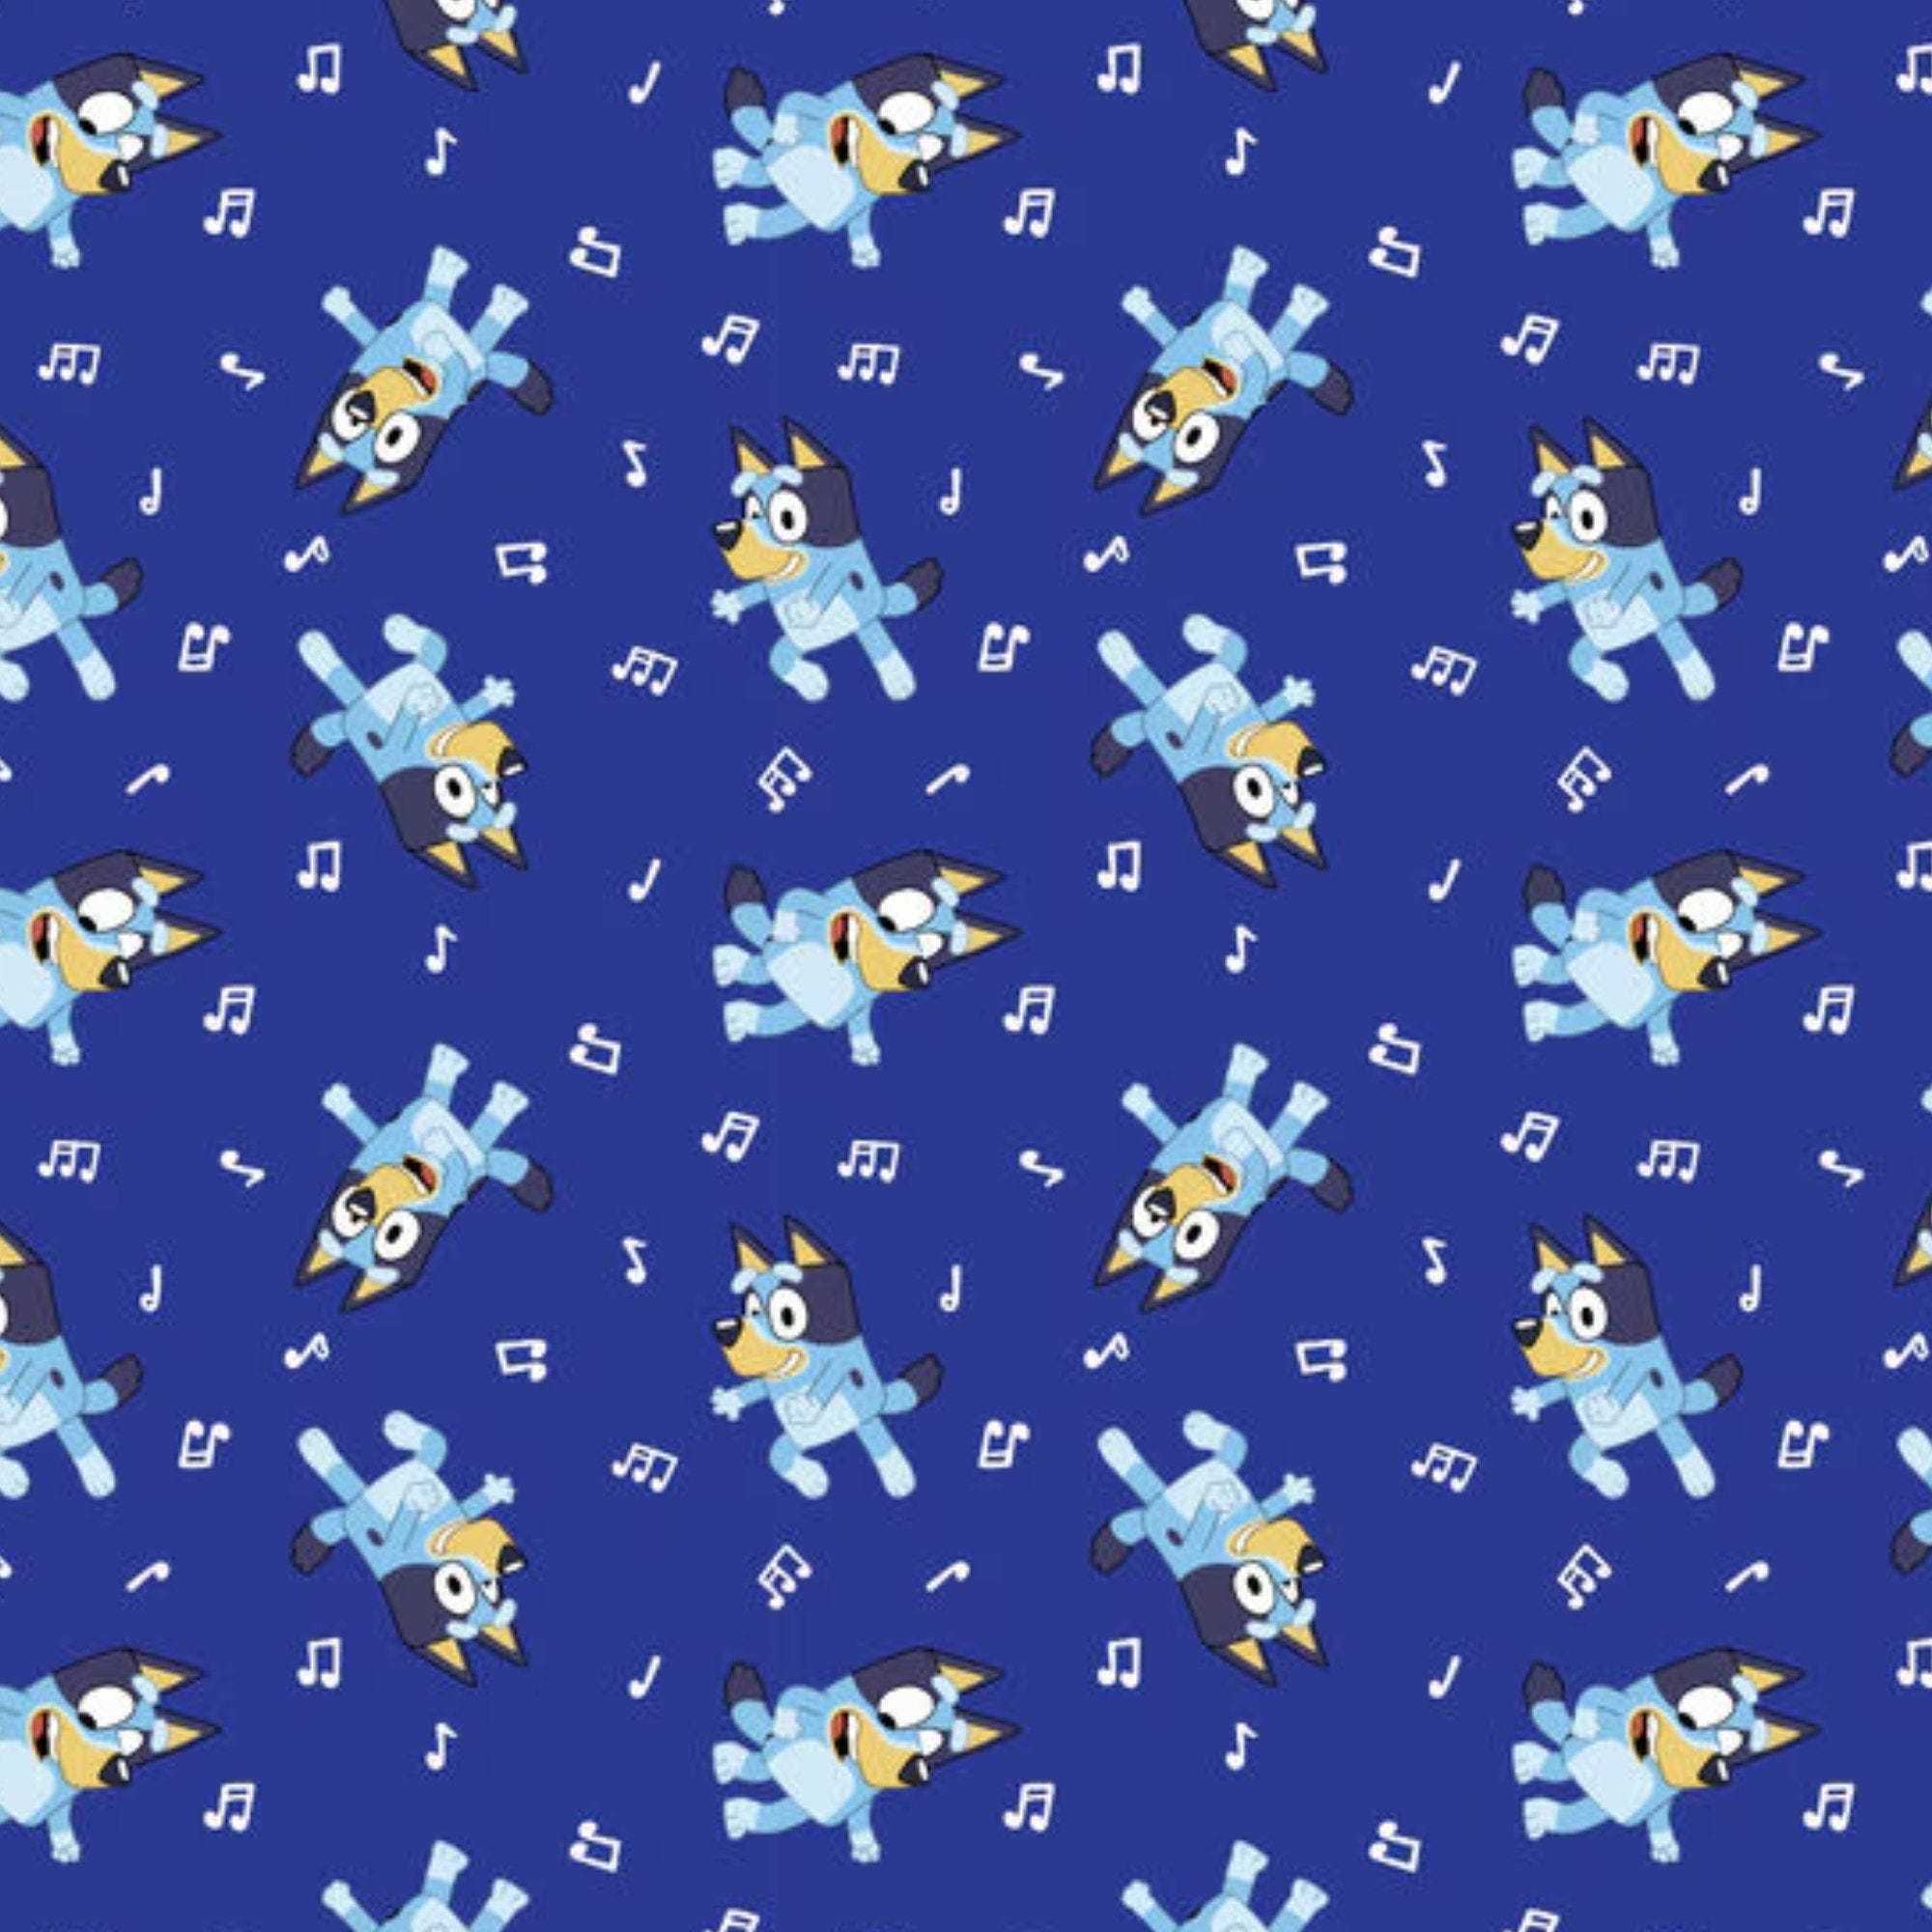 Bluey Fabric, Disney Junior Bluey Dance Mode Music on Dark Blue Licensed by Springs Creative Novelty Cotton Fabric, Disney Bluey Fabric